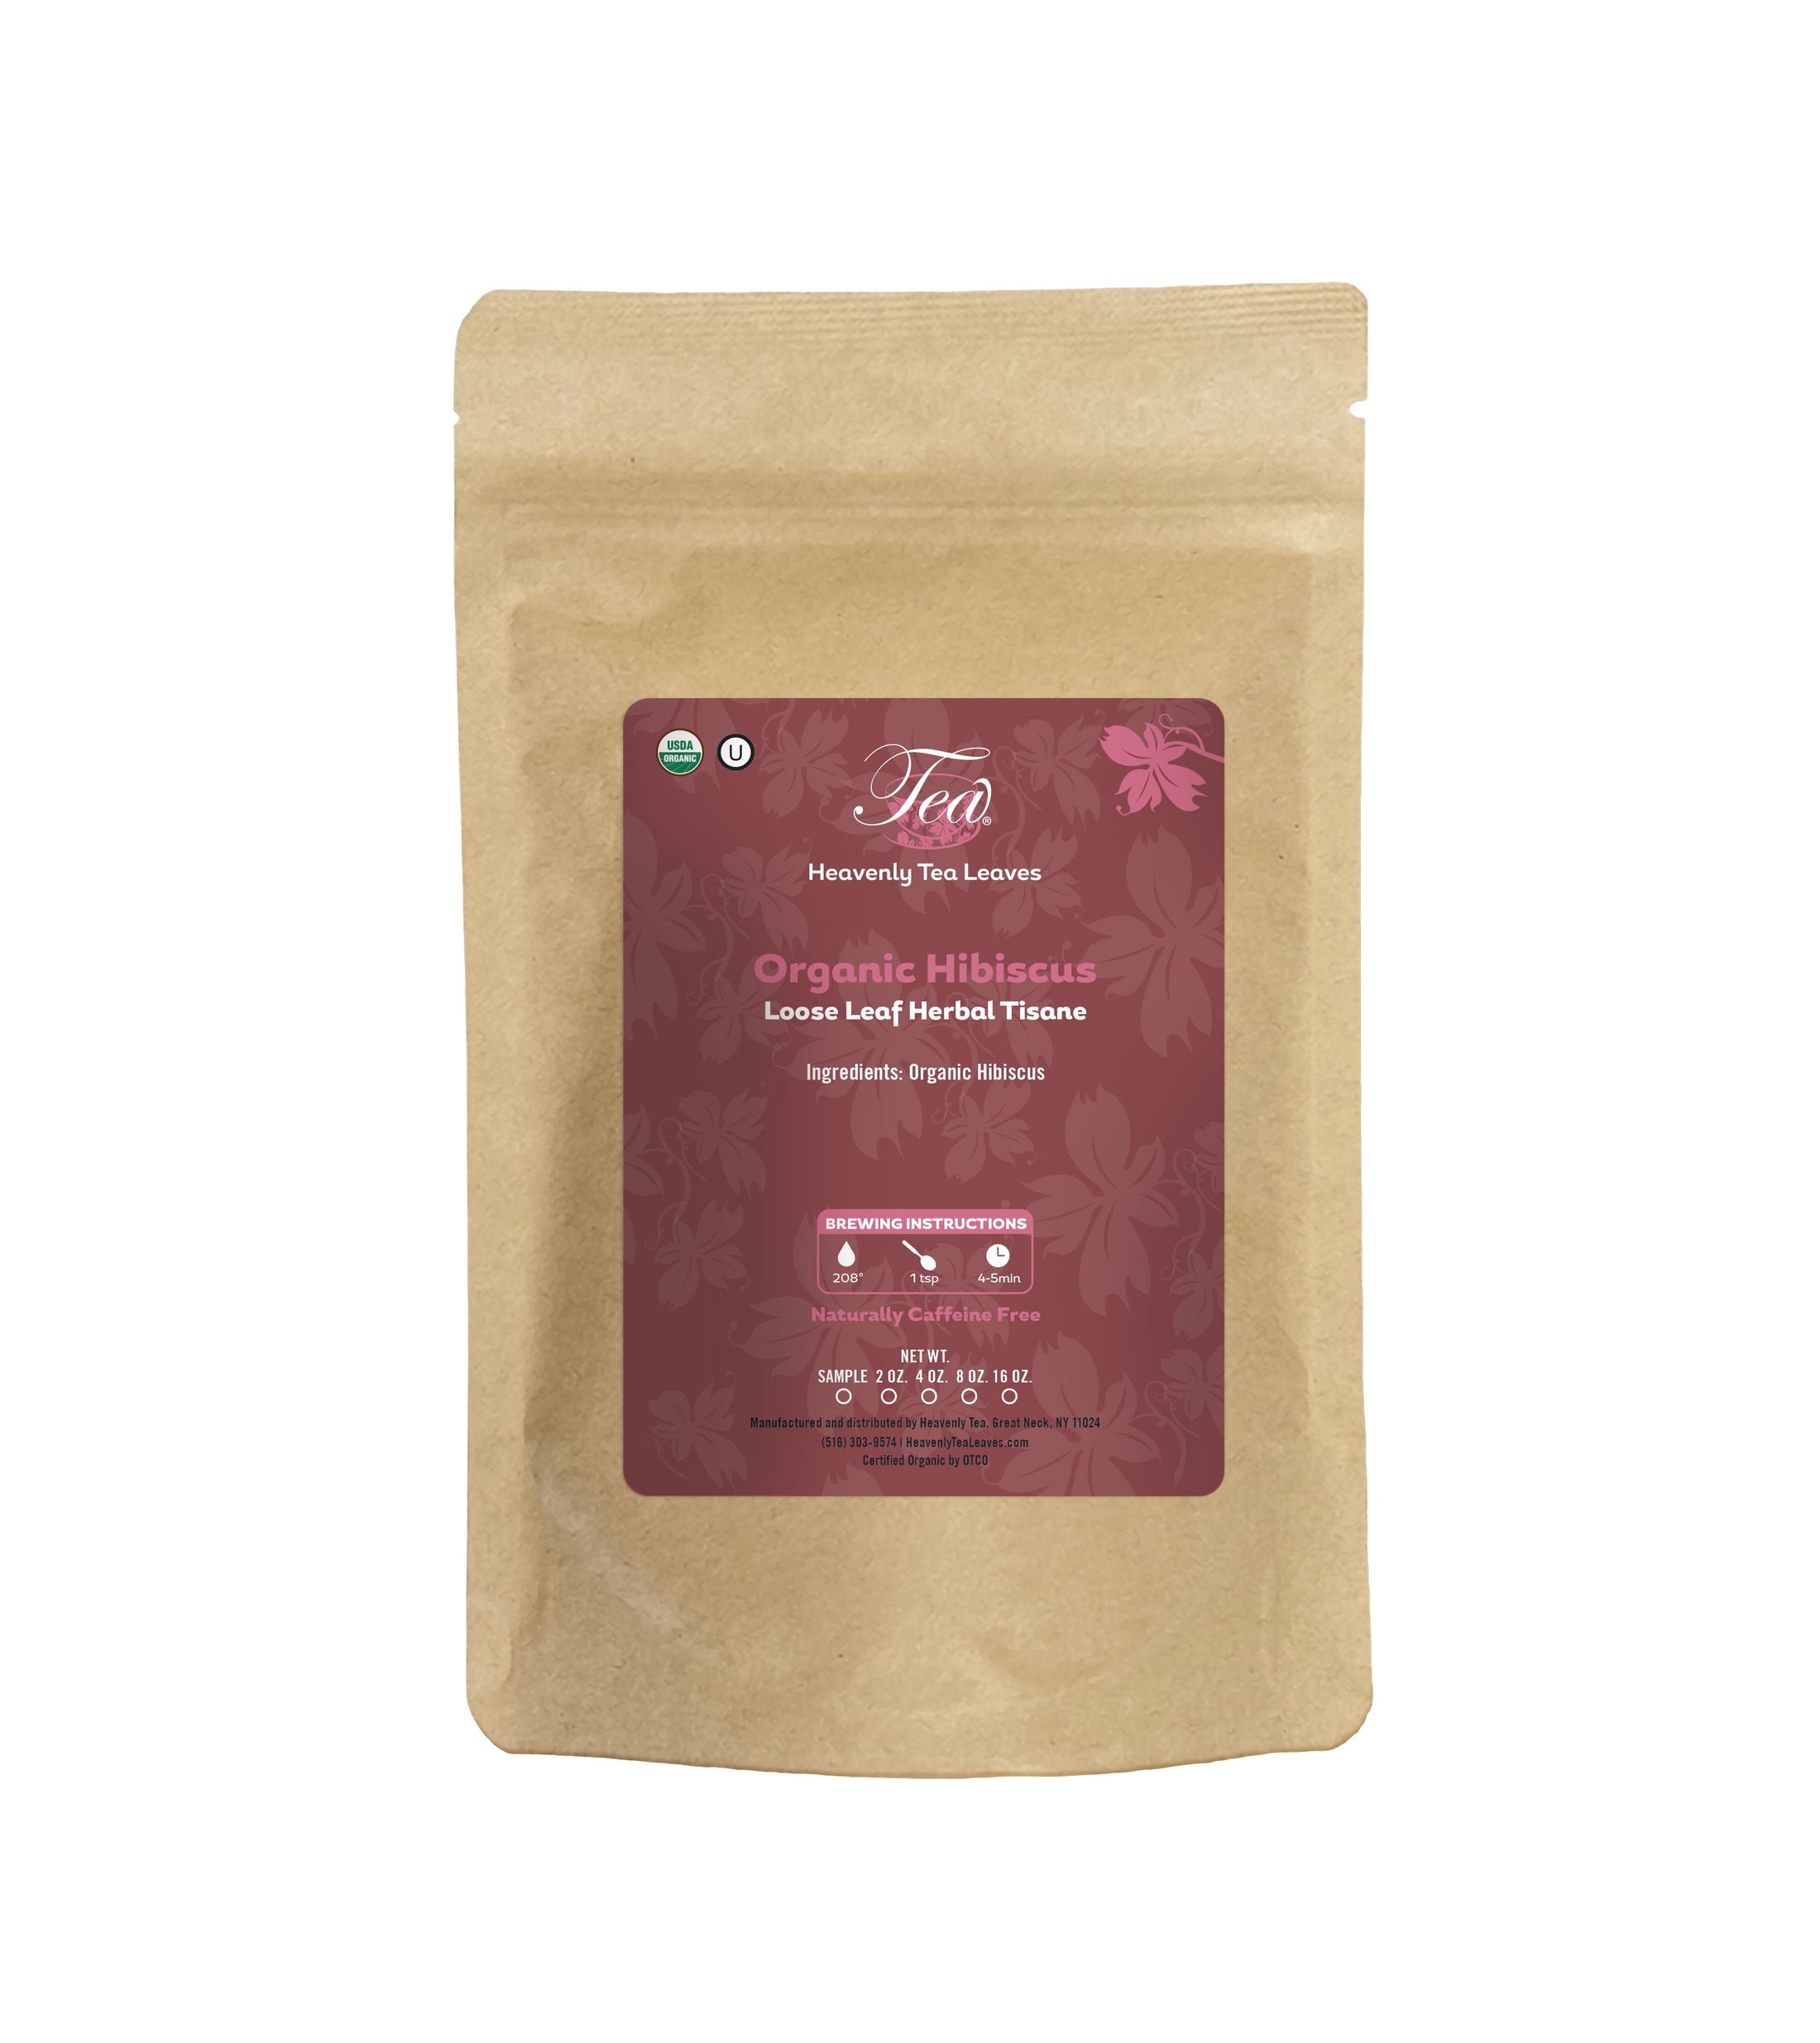 Organic Hibiscus - Hibiscus Flowers - Loose Leaf Herbal Tea - Naturally Caffeine Free - Antioxidant Rich | Heavenly Tea Leaves